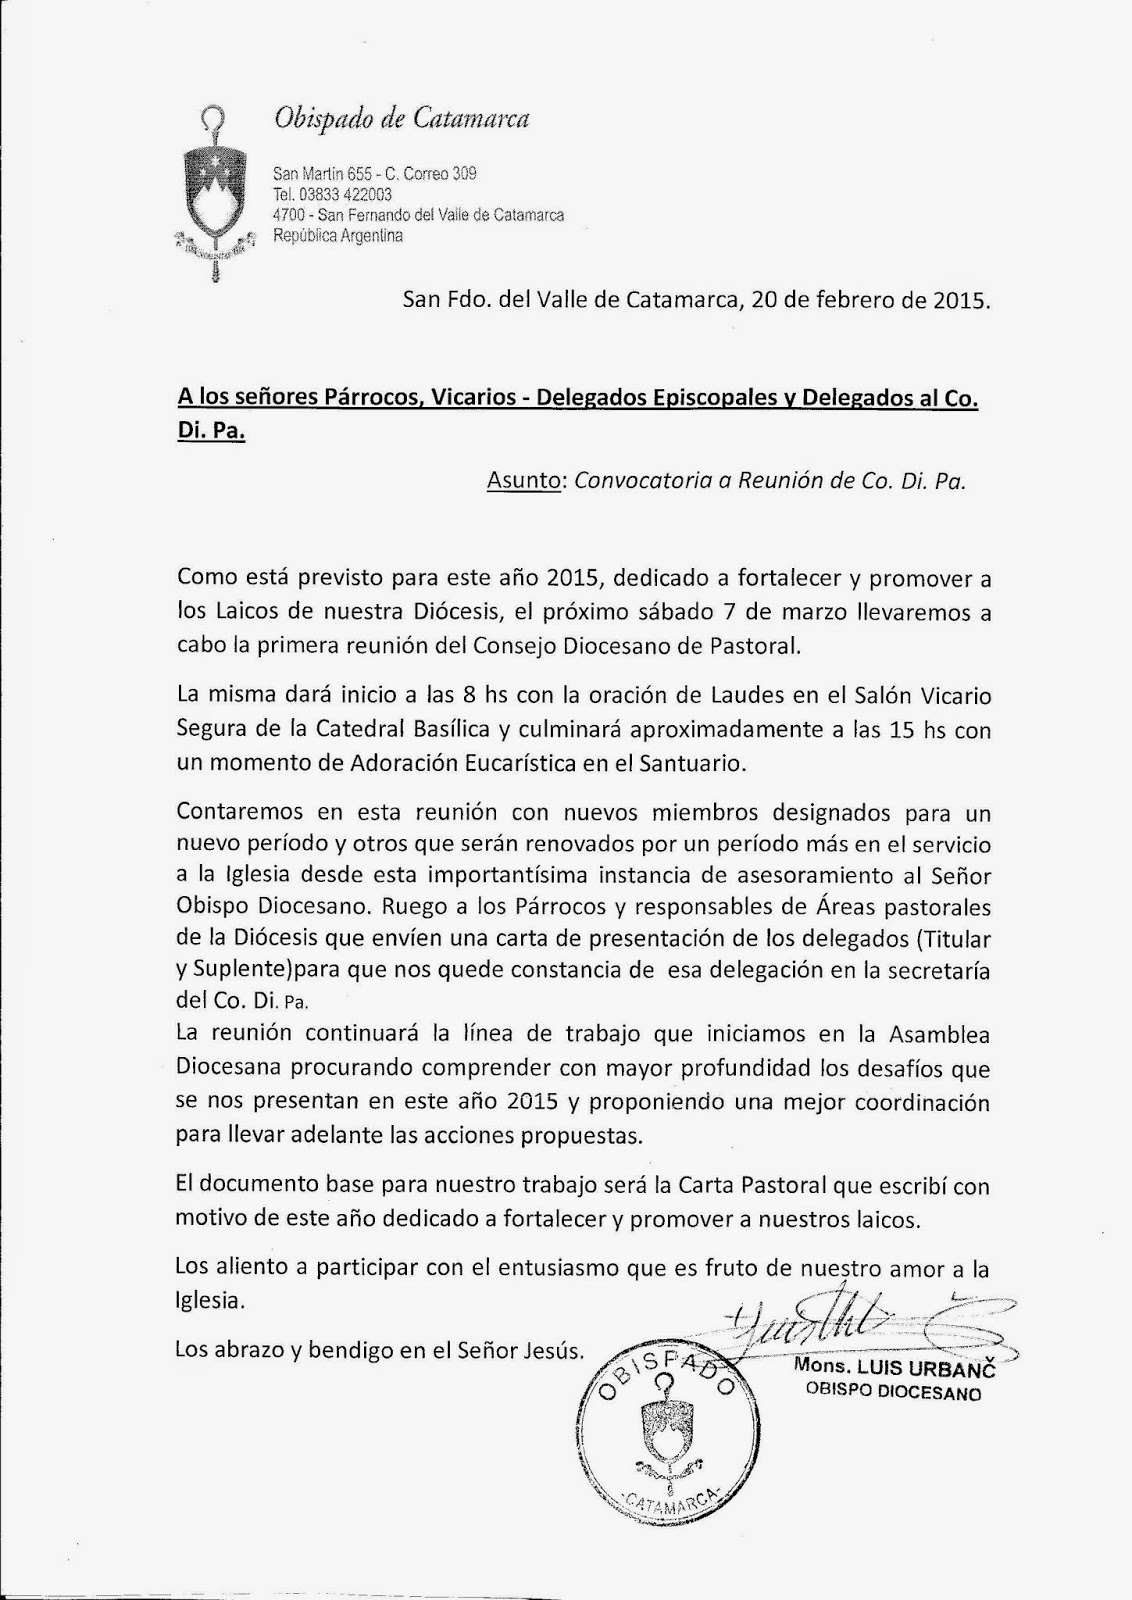 Prensa Obispado de Catamarca: Carta de convocatoria a la 